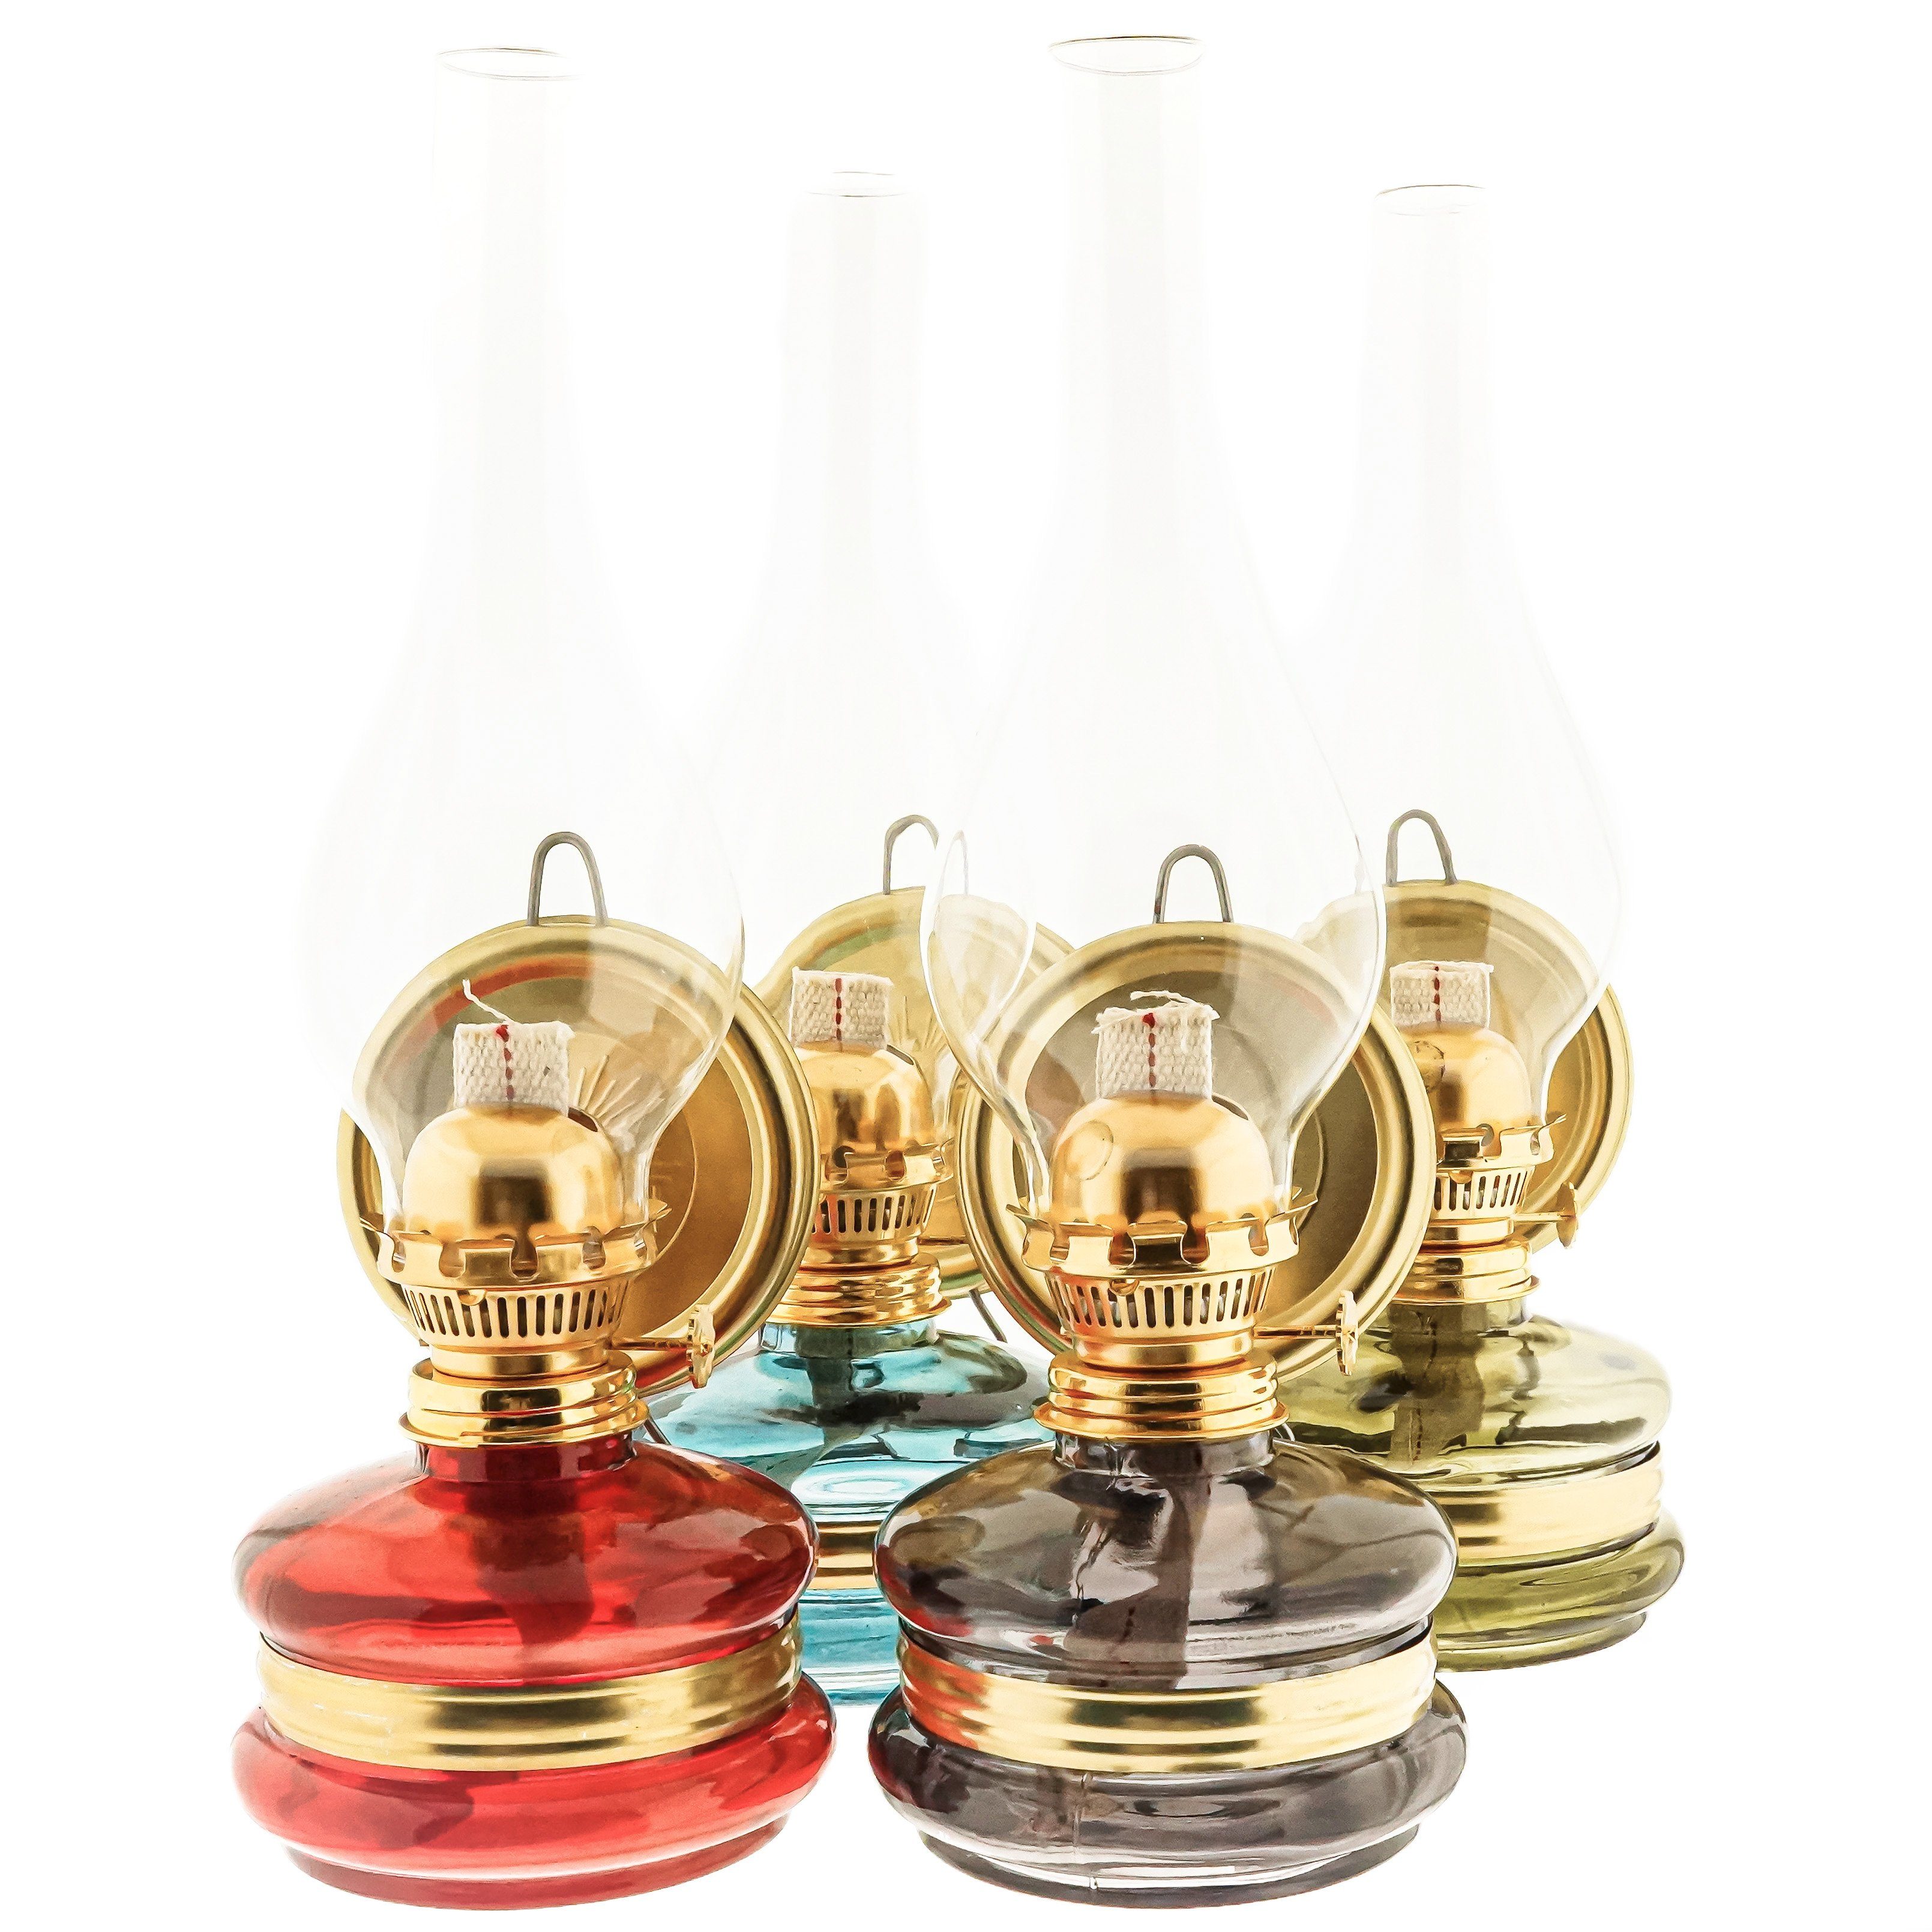 Almina Laterne Öllampe Glaszylinder Gold Petroleumlampe Vintage Dekolampe